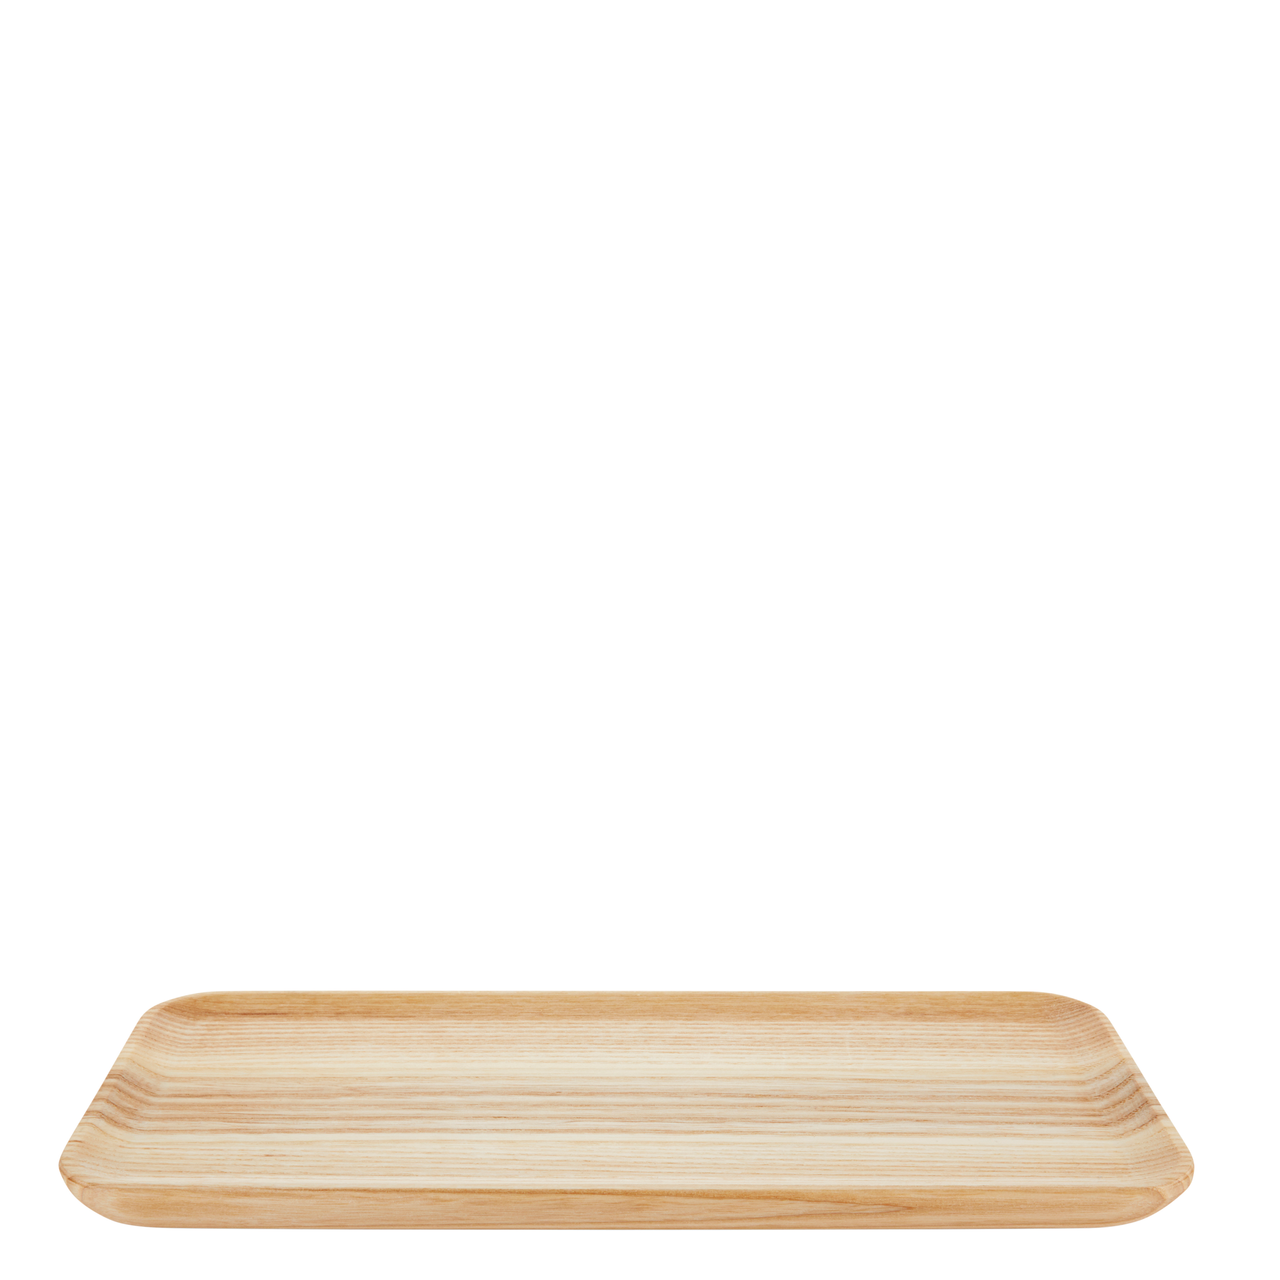 Tray wood (ashwood) rectangulard 27x13cm